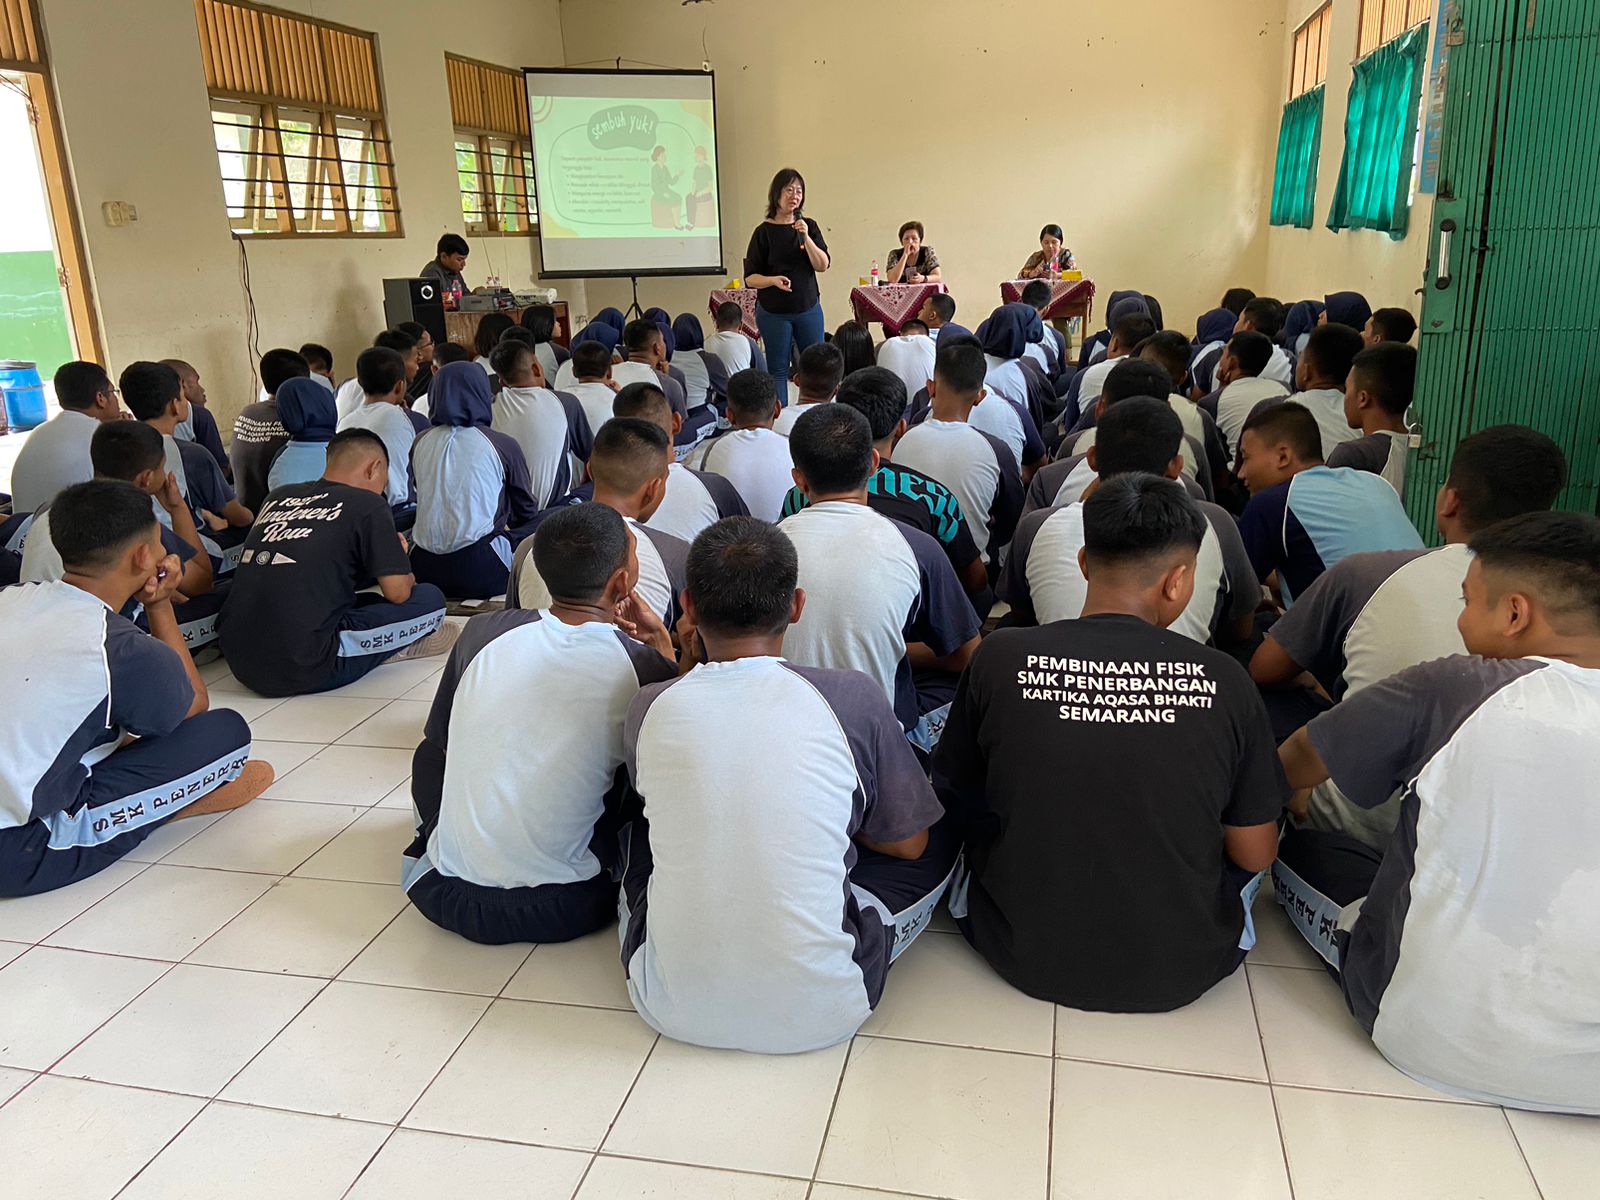 Seminar Motivasi Kesehatan Mental SMK Penerbangan Kartika Aqasa Bhakti Semarang